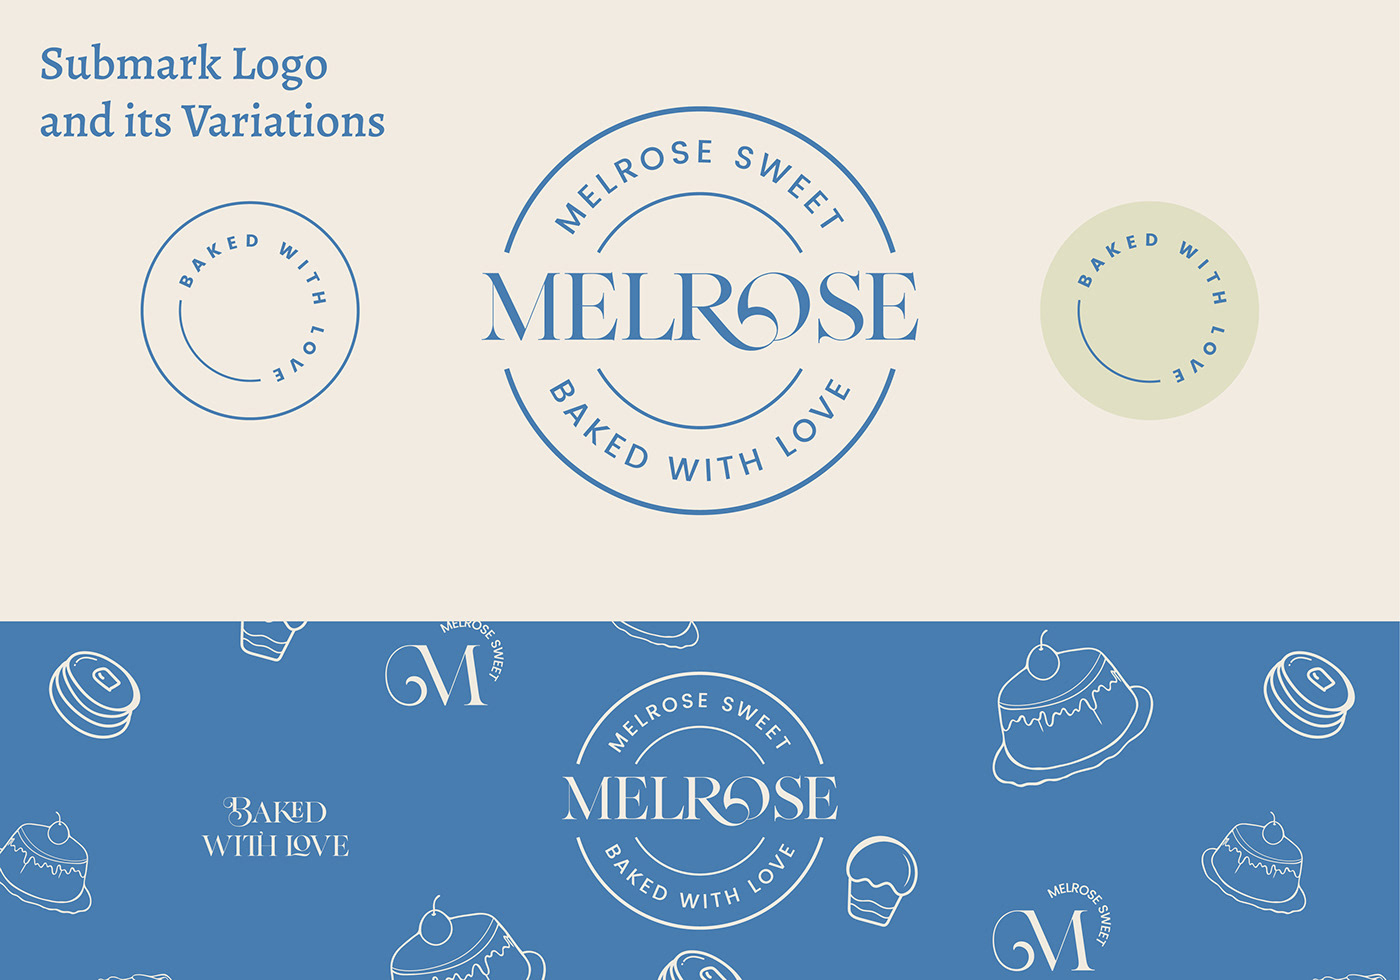 dessert desserts sweet Sweets cloud branding  sophisticated elegant Brand Design Case Study